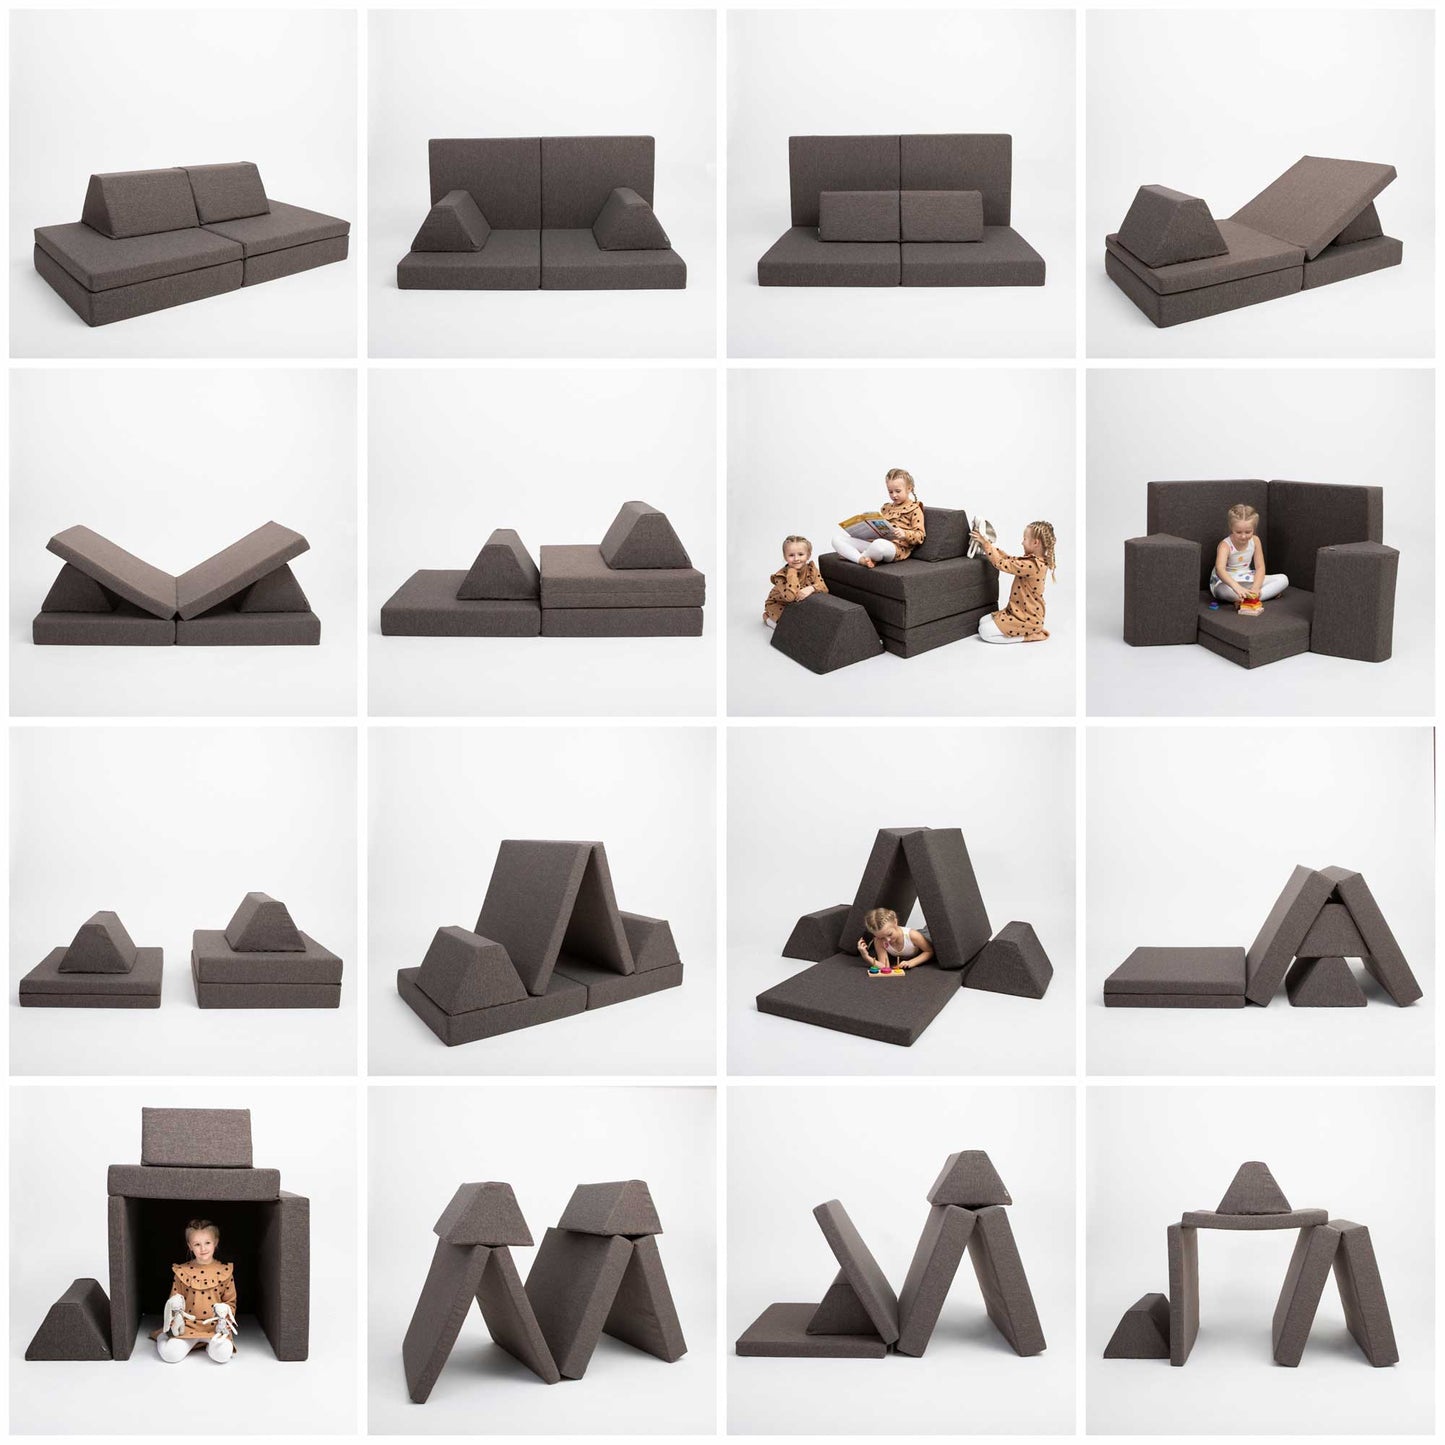 16 build ideas for dark brown Monboxy activity sofa